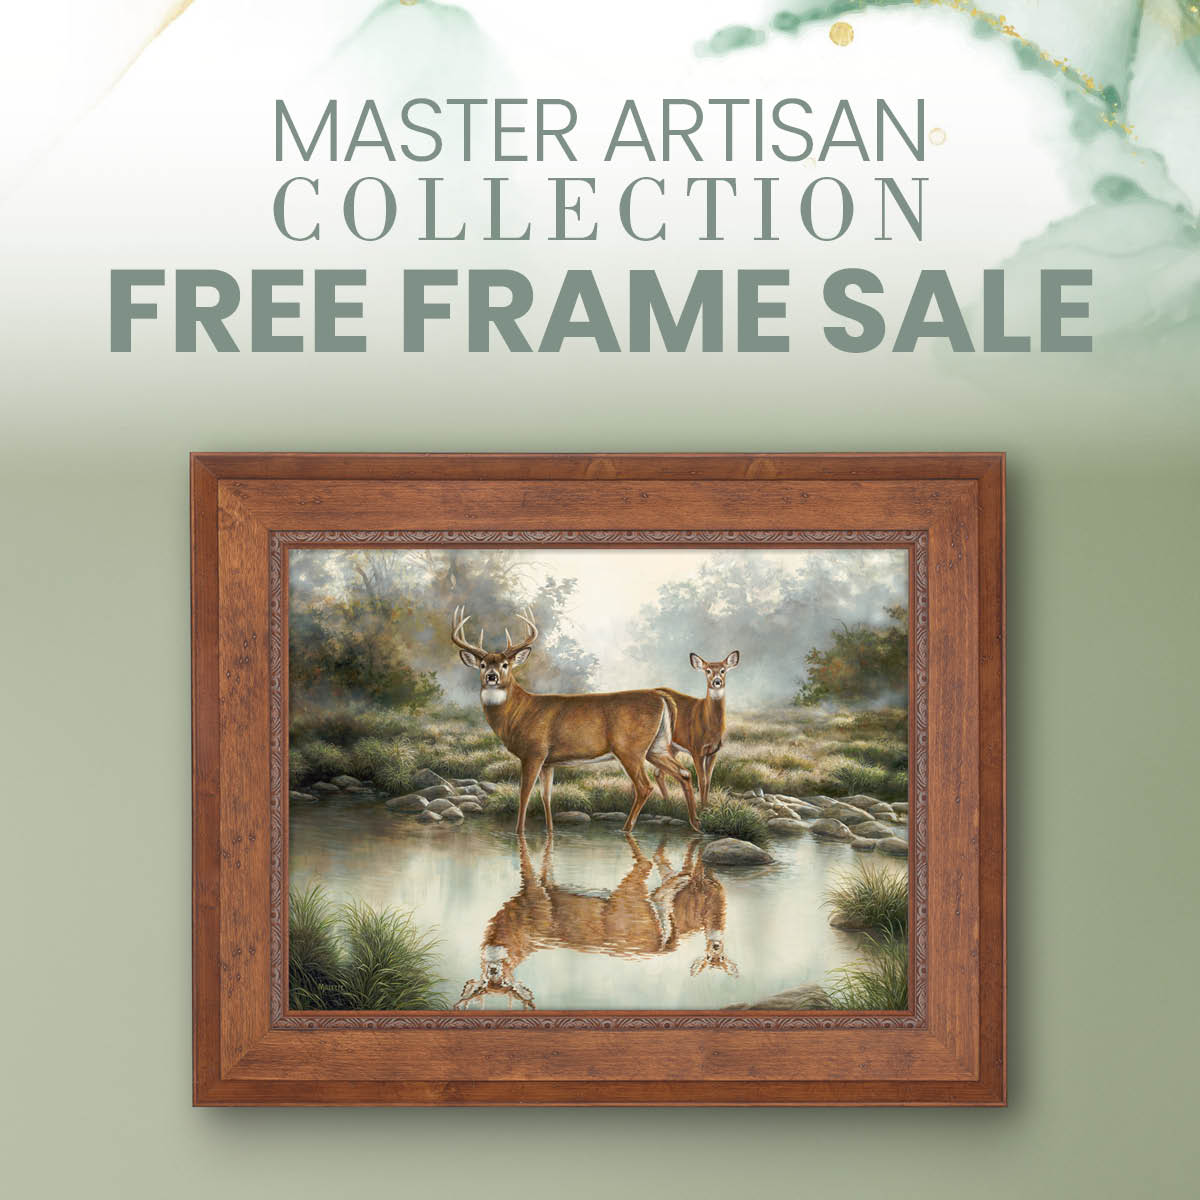 Master Artisan Canvas Free Frame Promotion